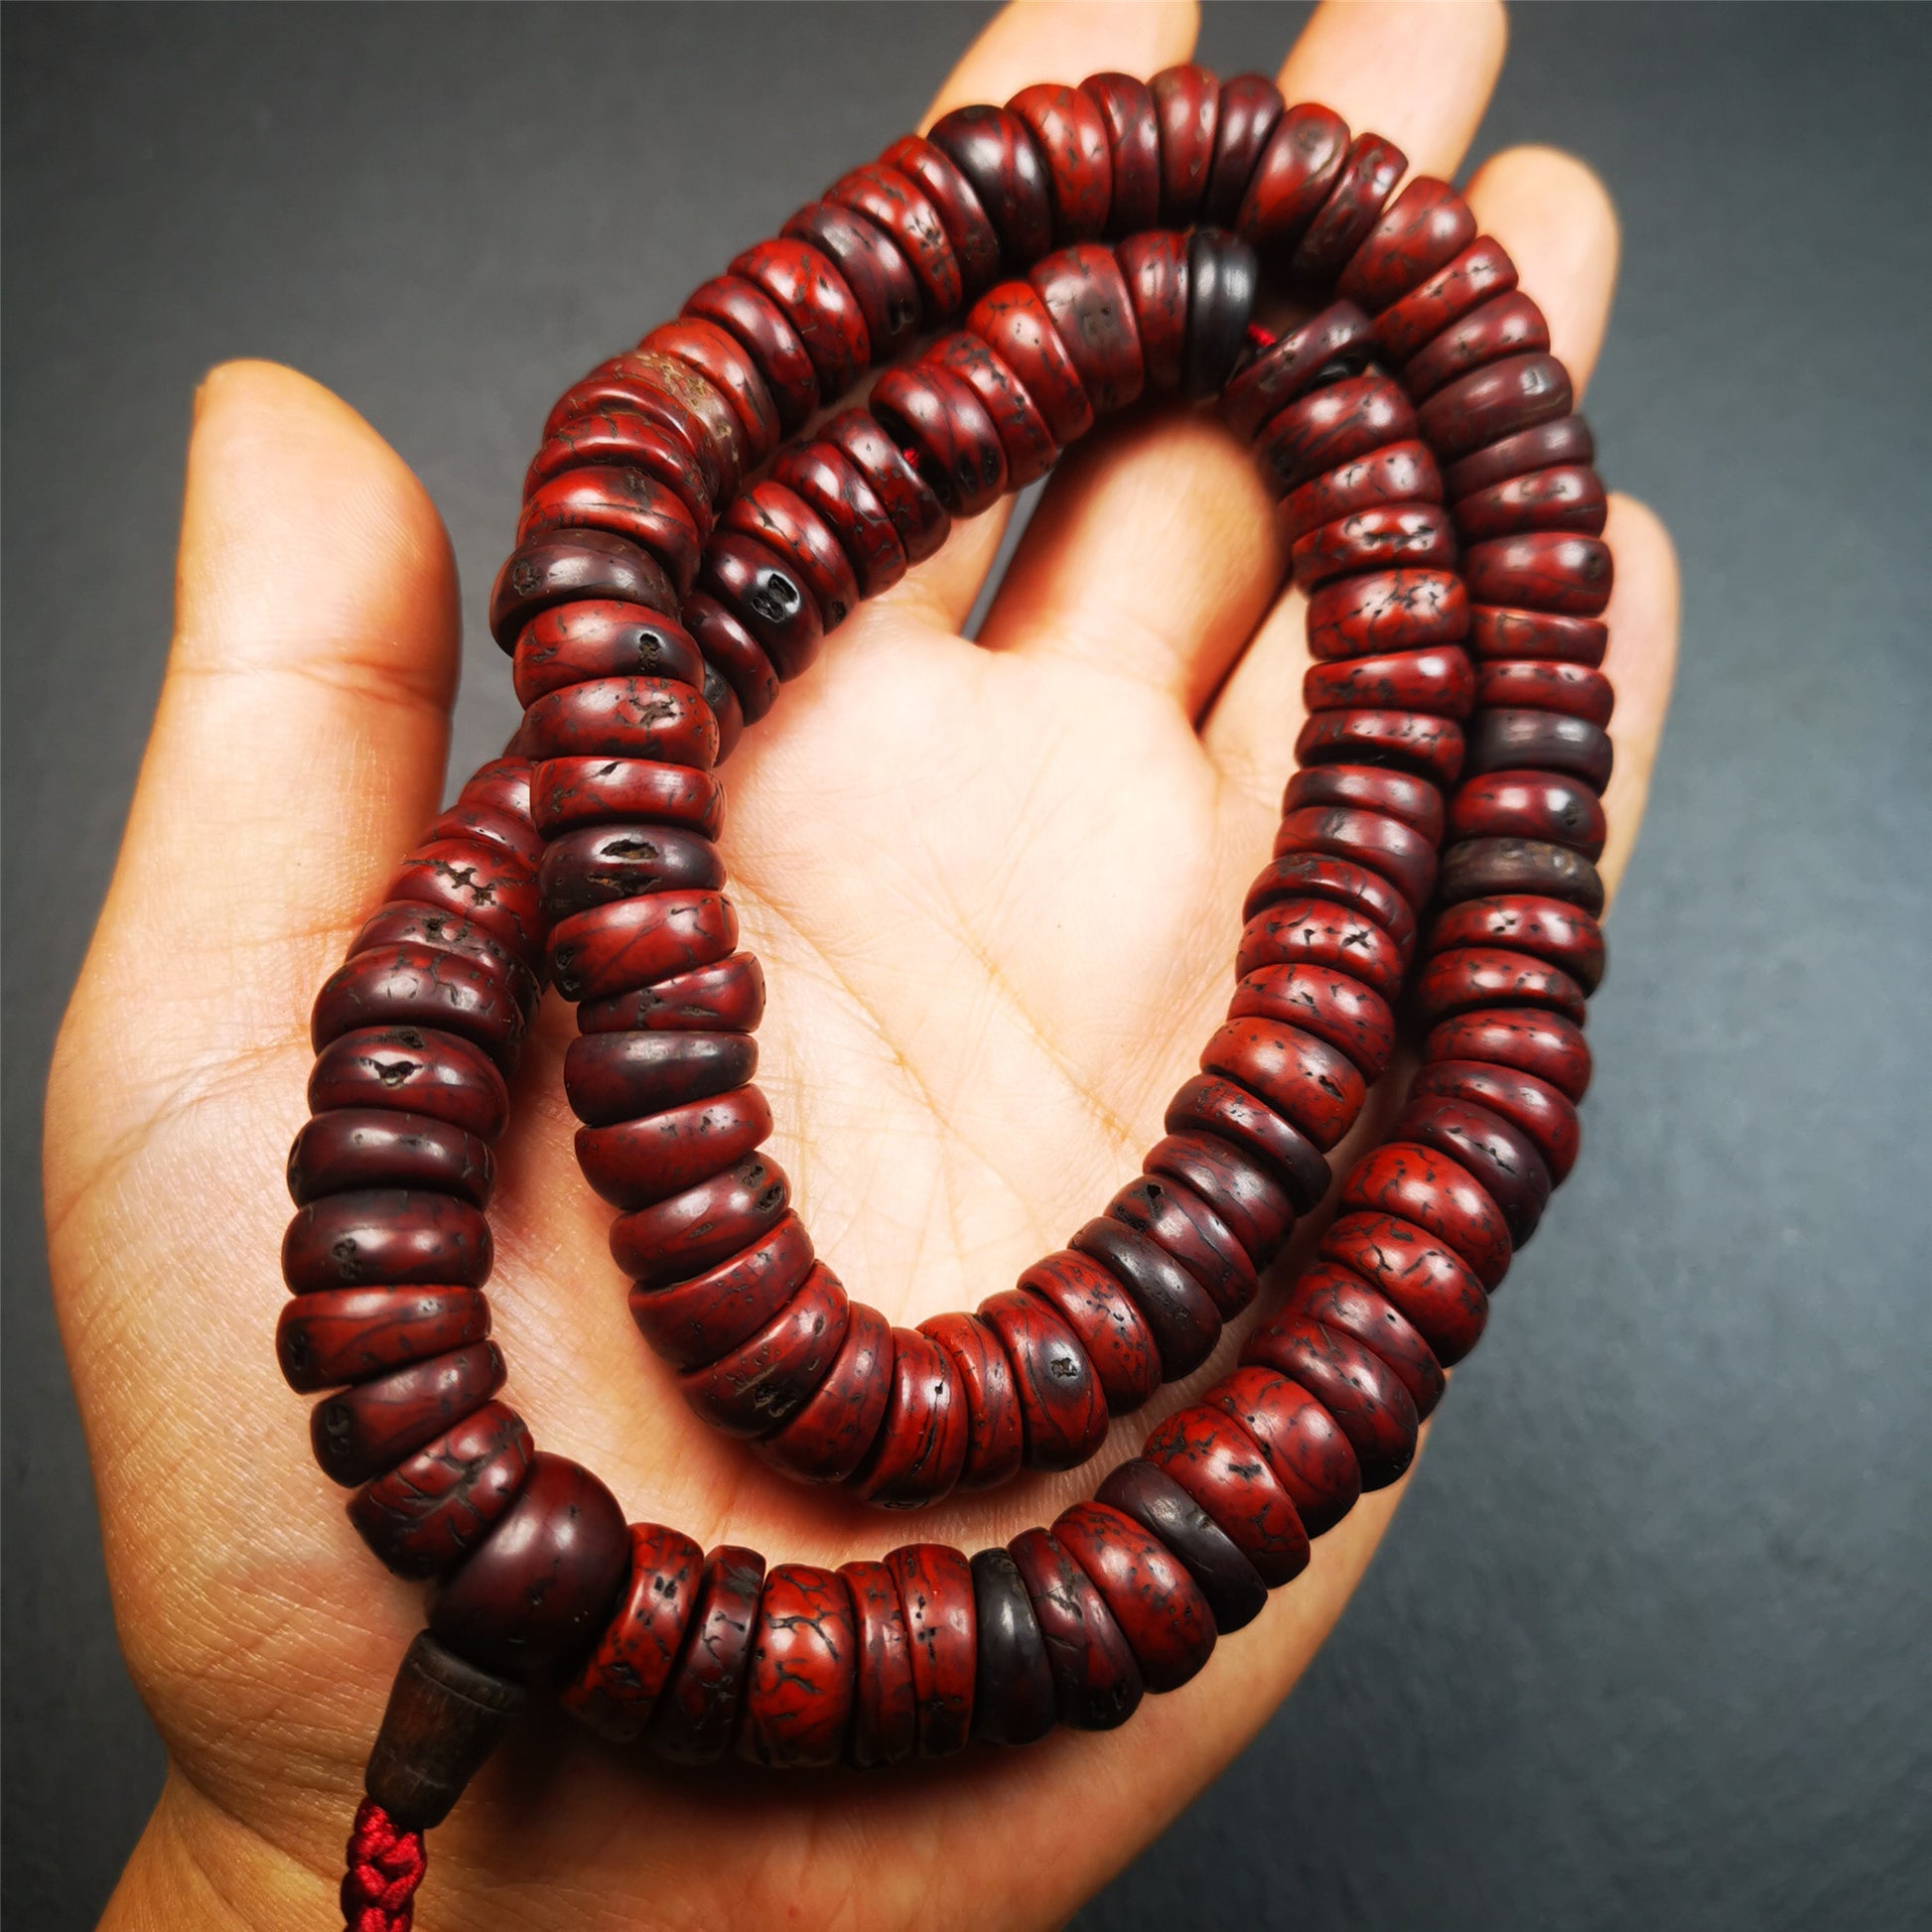 Gandhanra Old 108 Bodhi Seed Beads Mala,13mm Prayer Beads Necklace